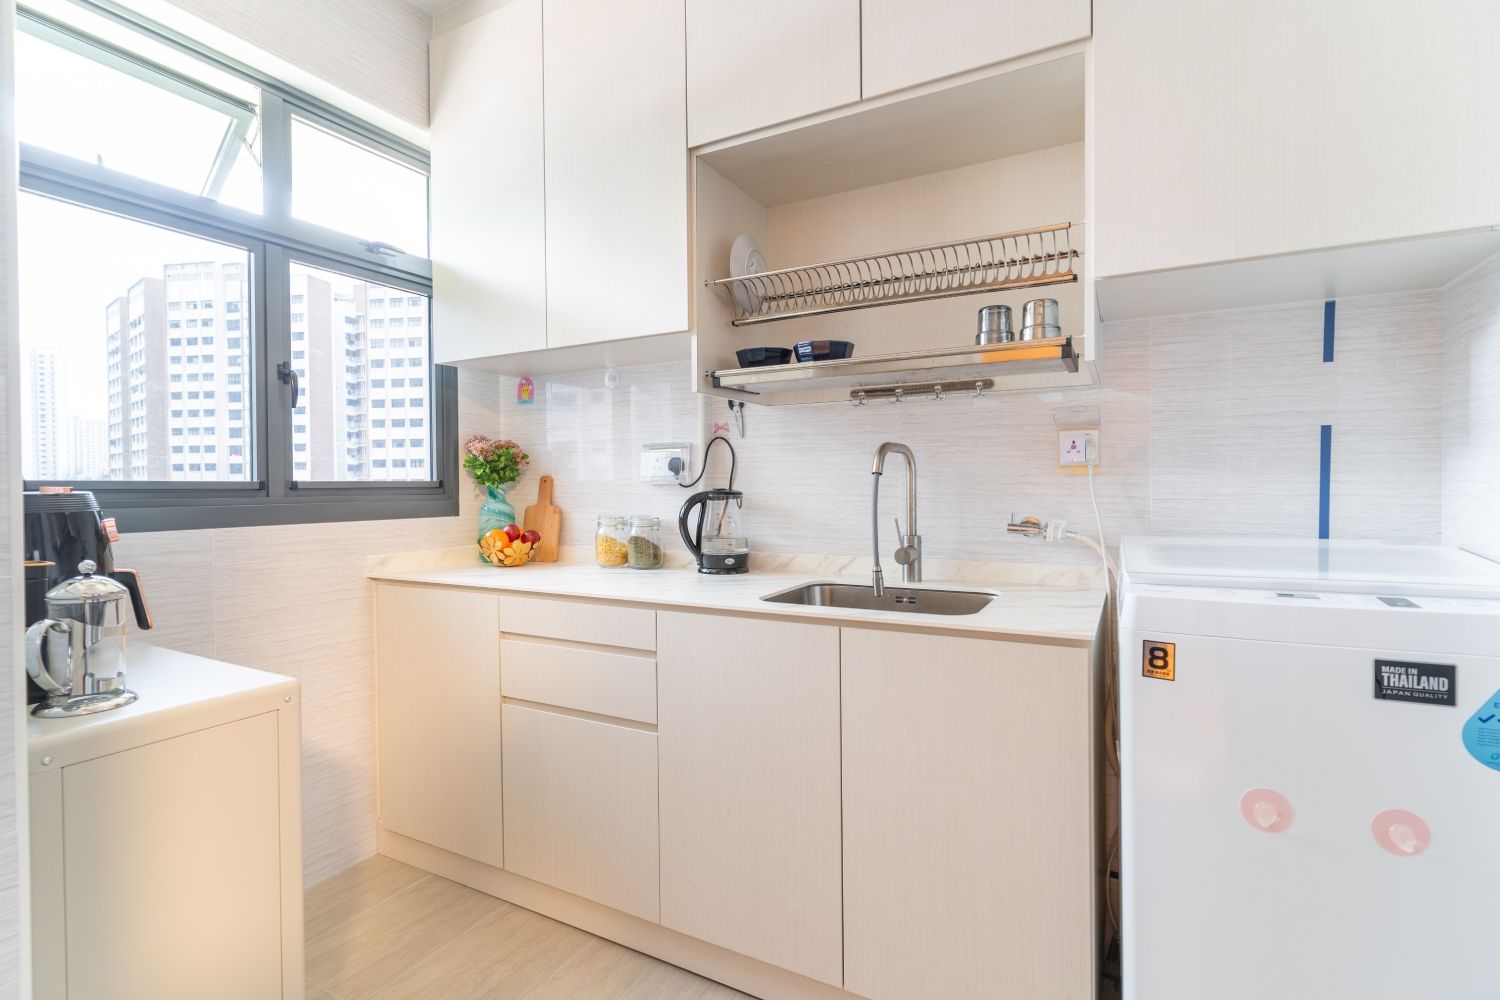 Scandinavian Interior Design For Kitchens With A White Backsplash